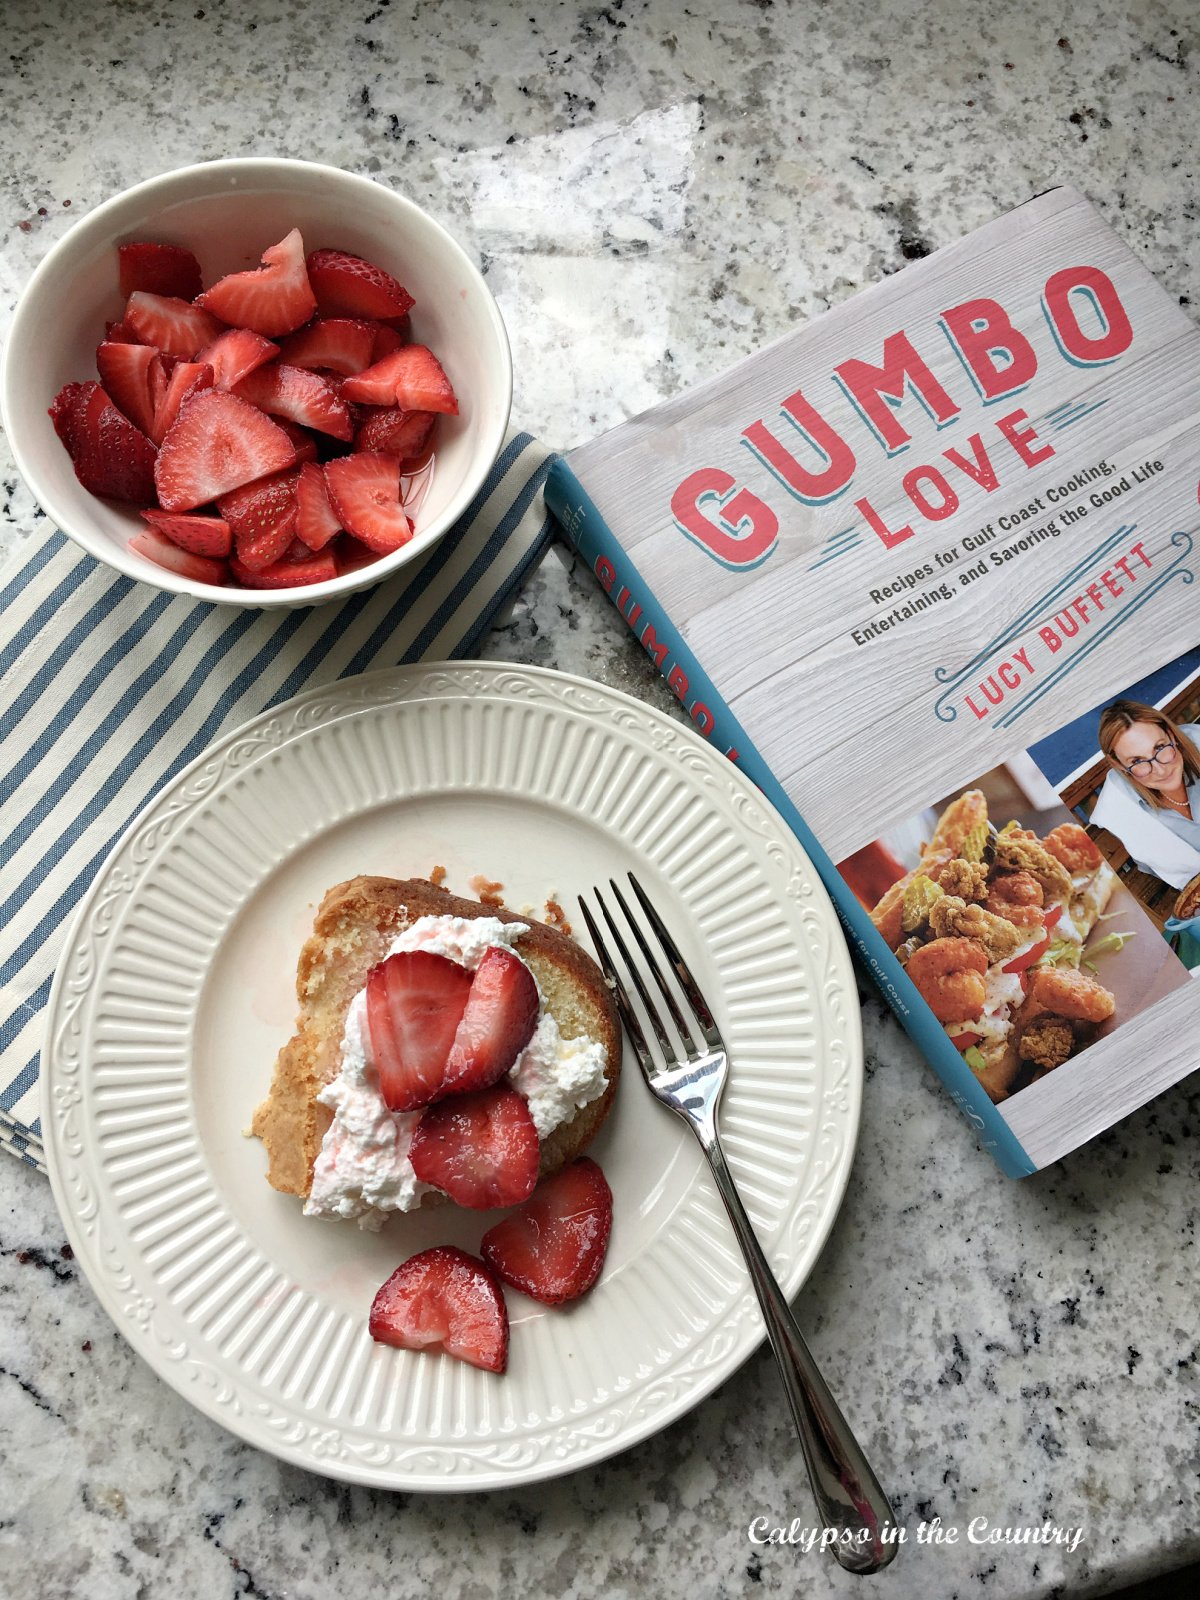 Gumbo Love Cookbook and Strawberry Pound Cake